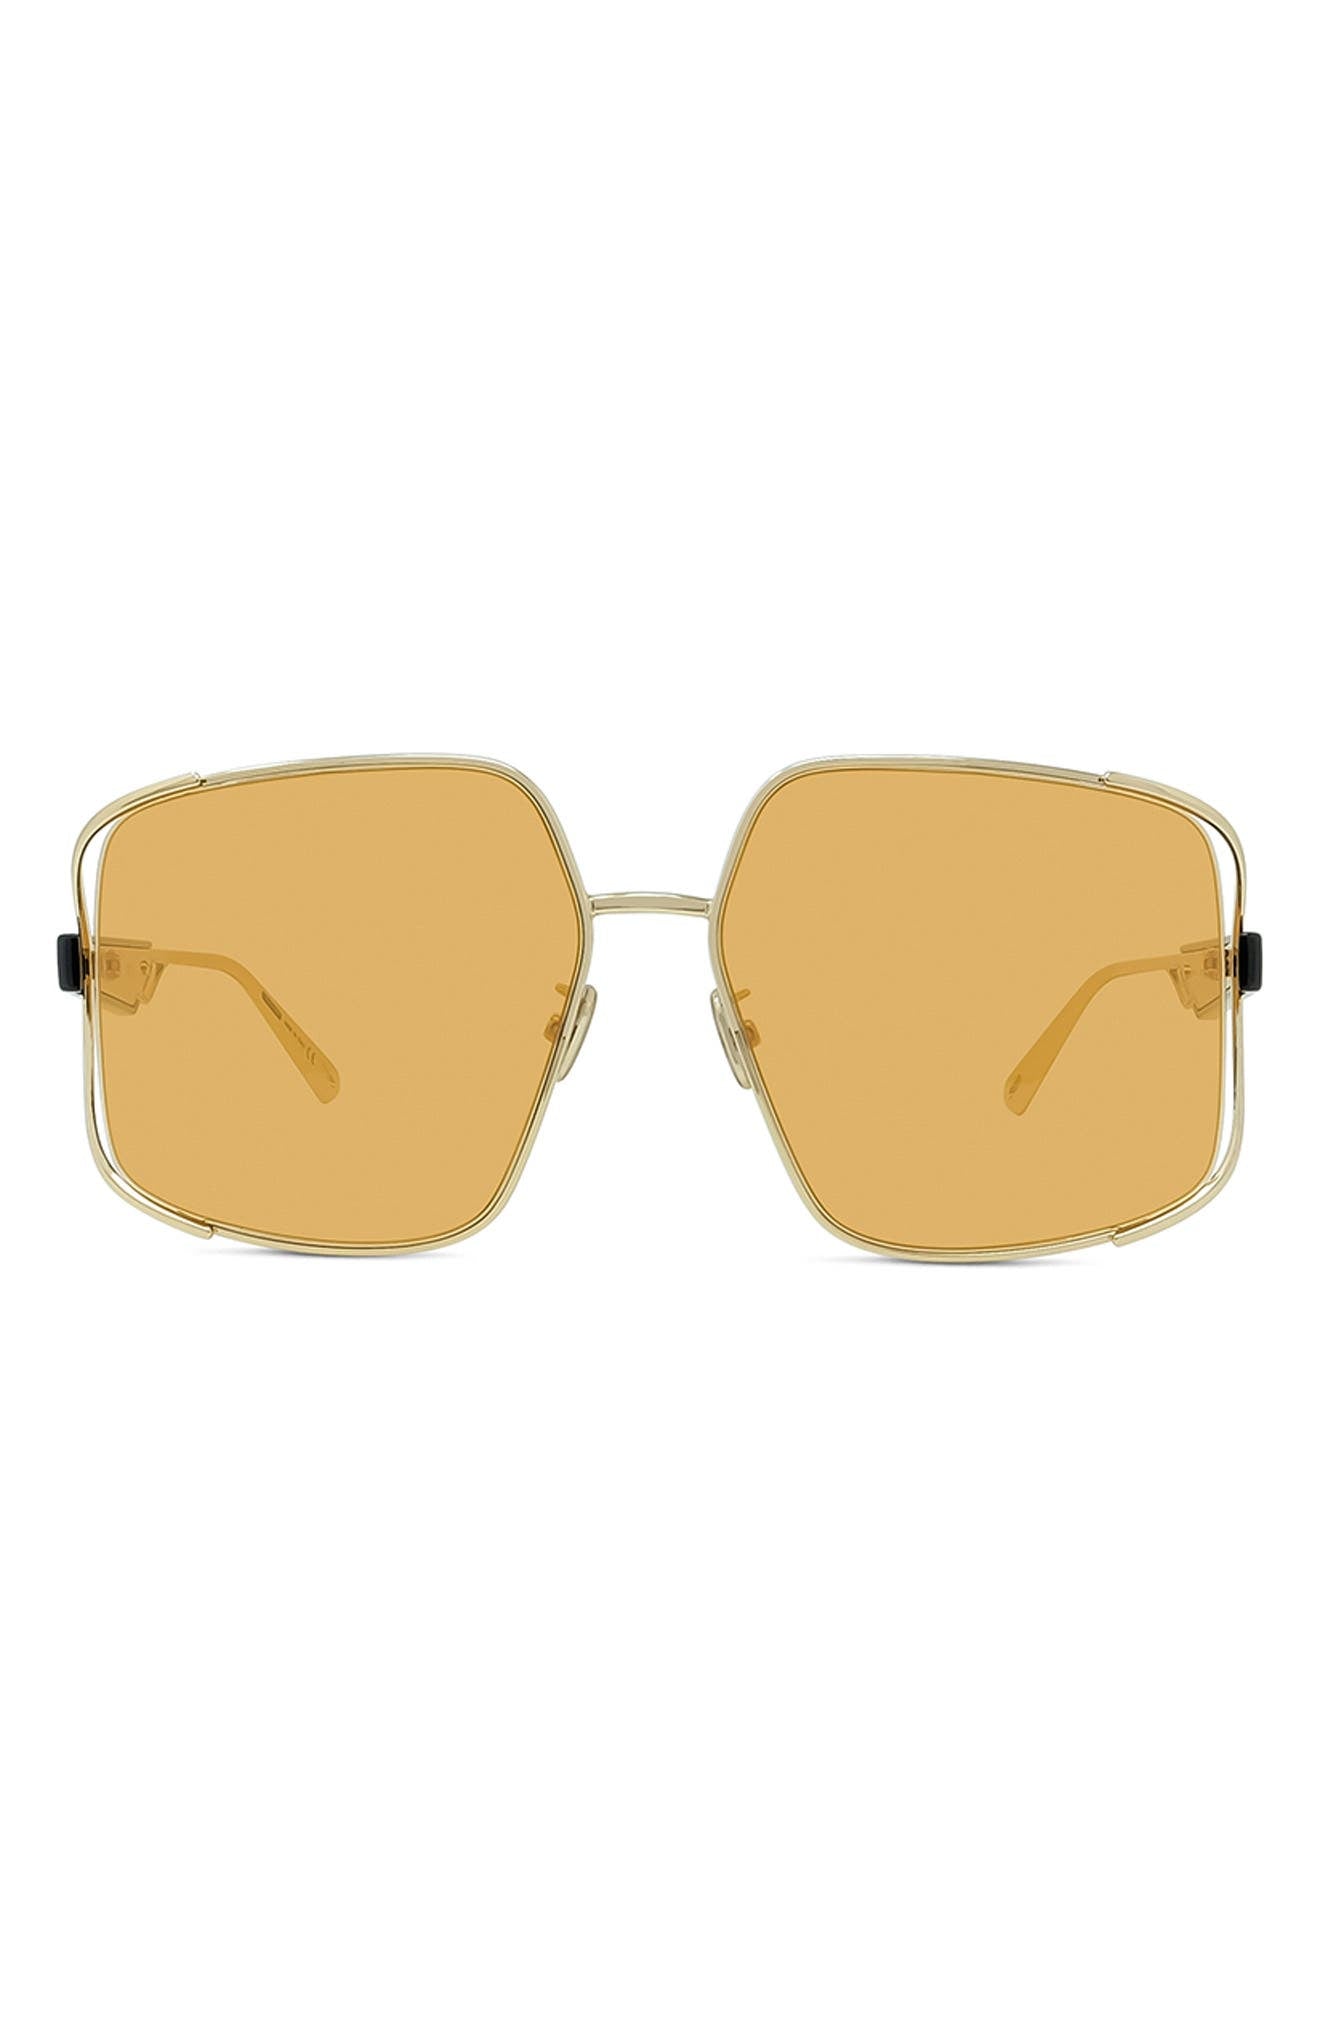 Christian Dior ARCHIDIOR-S1U-B0K0-61  New Sunglasses